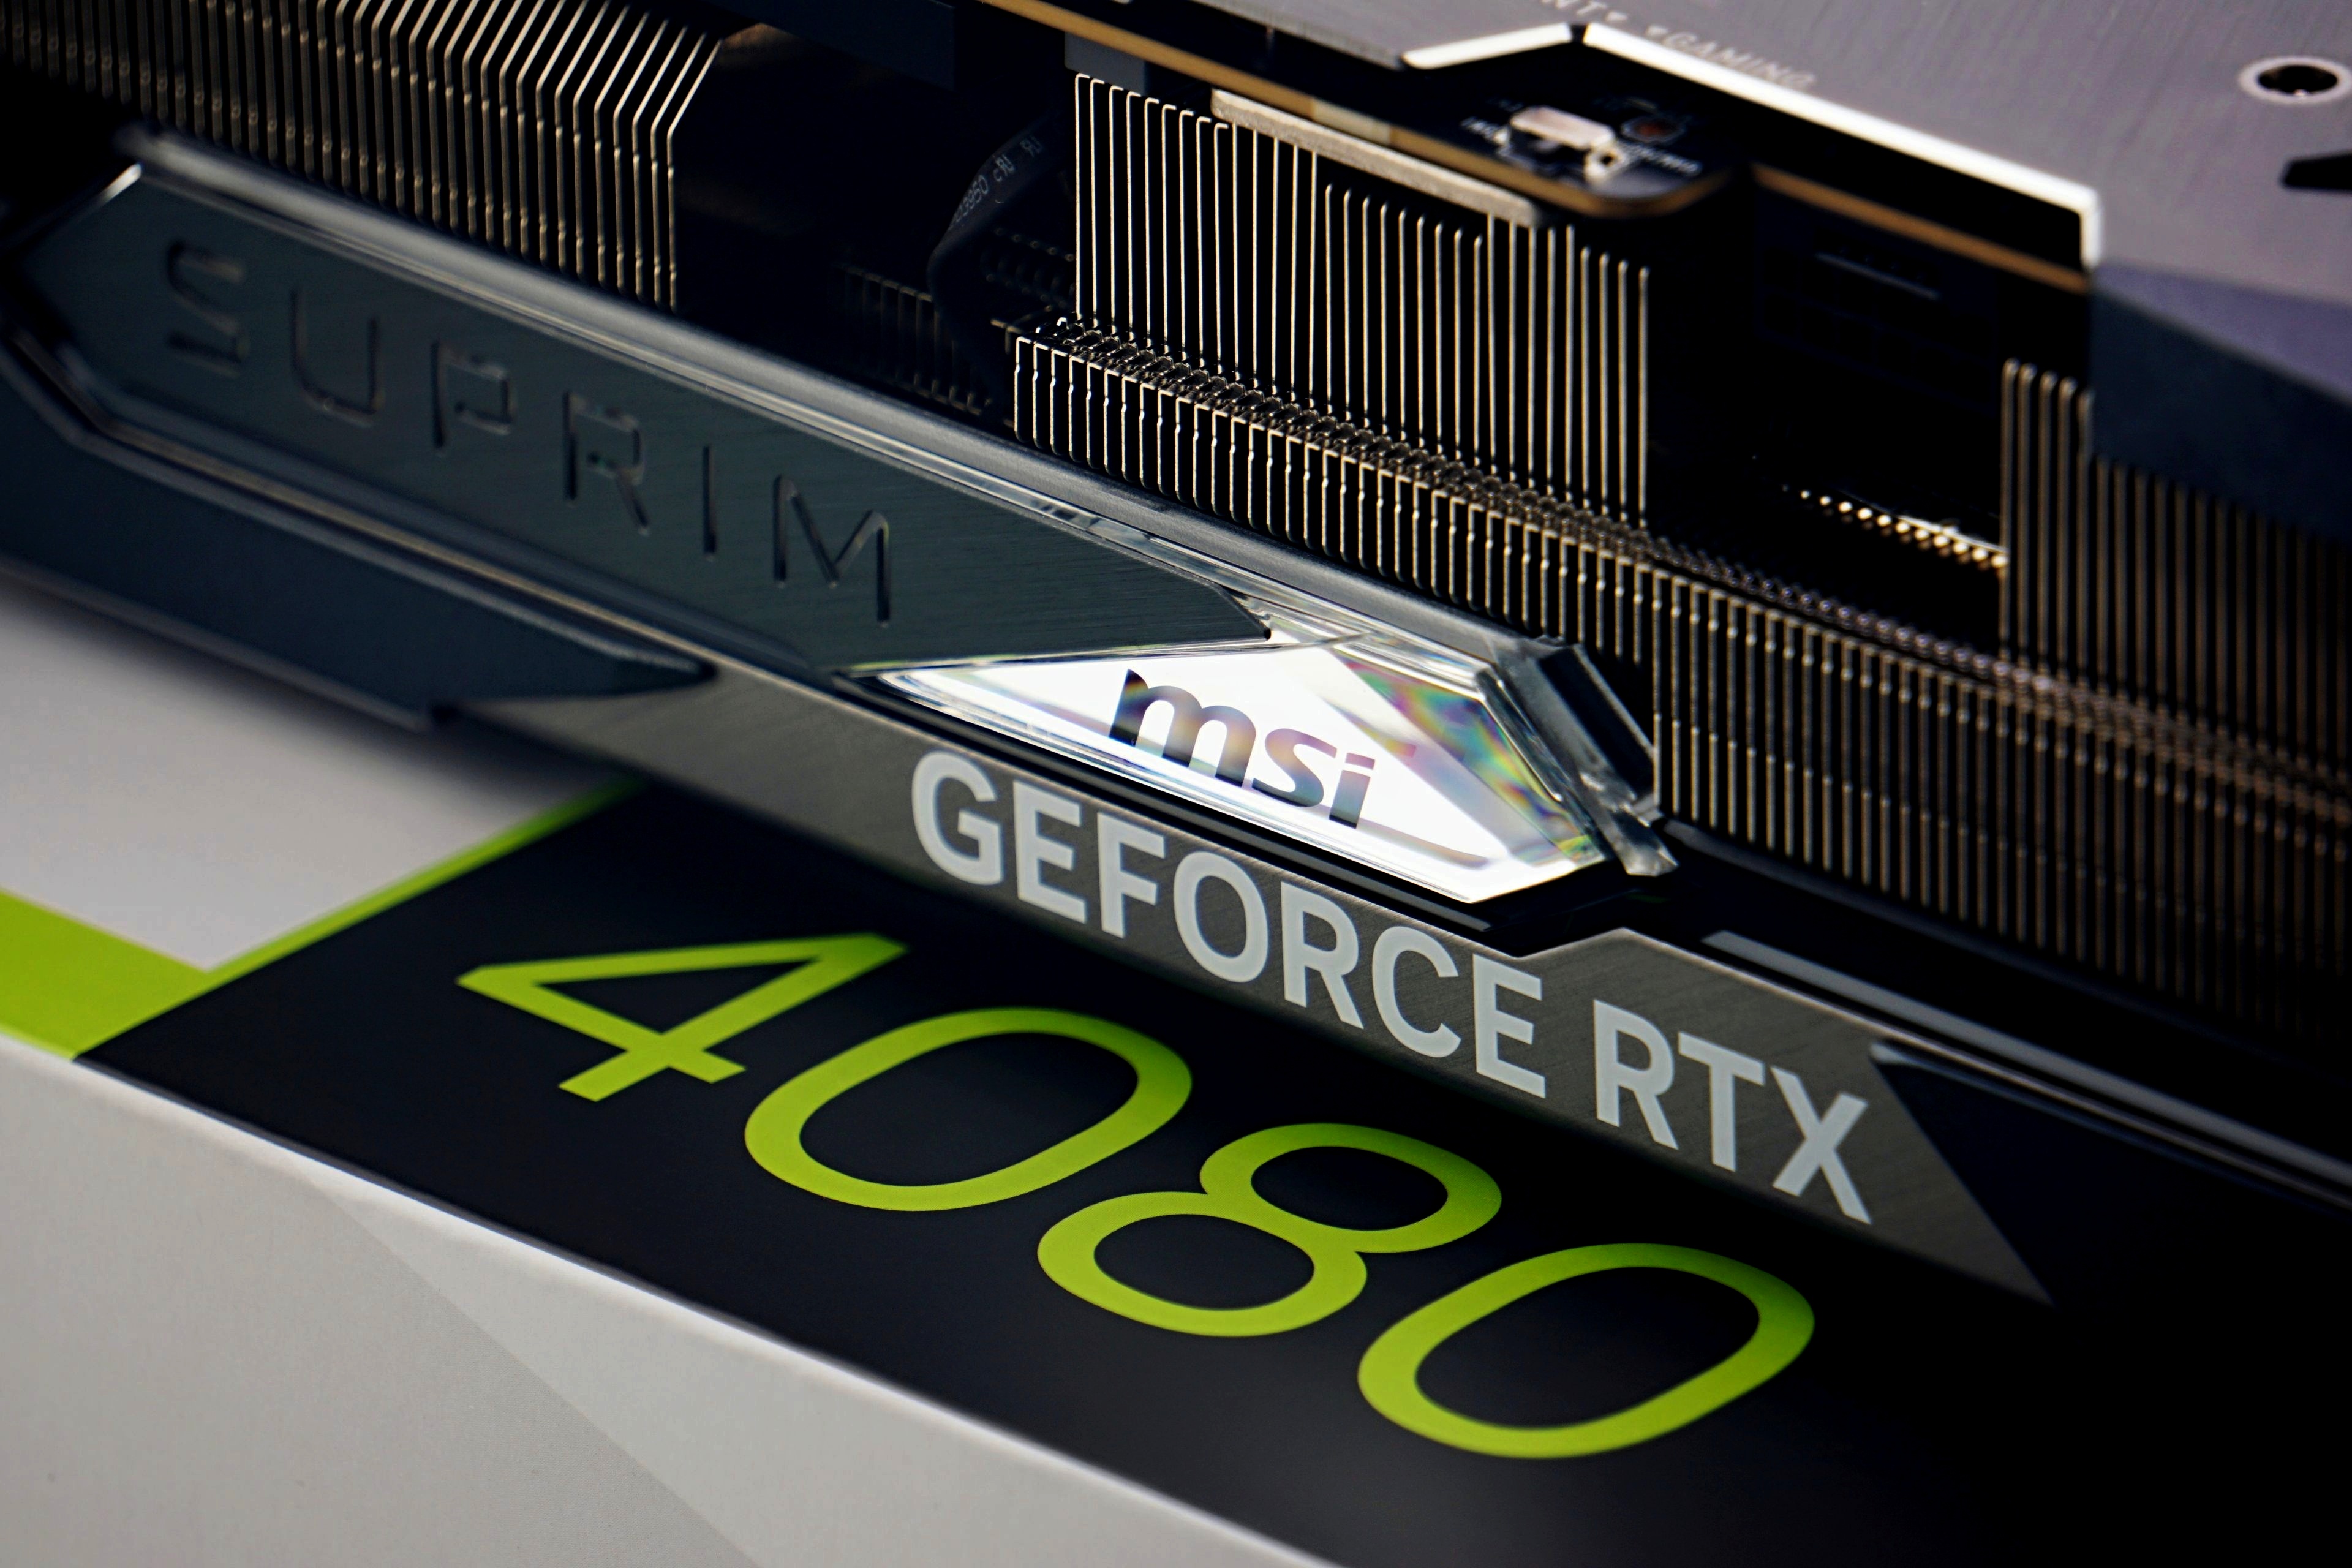 MSI Nvidia GeForce RTX 4080 16GB GAMING X TRIO Graphics Card